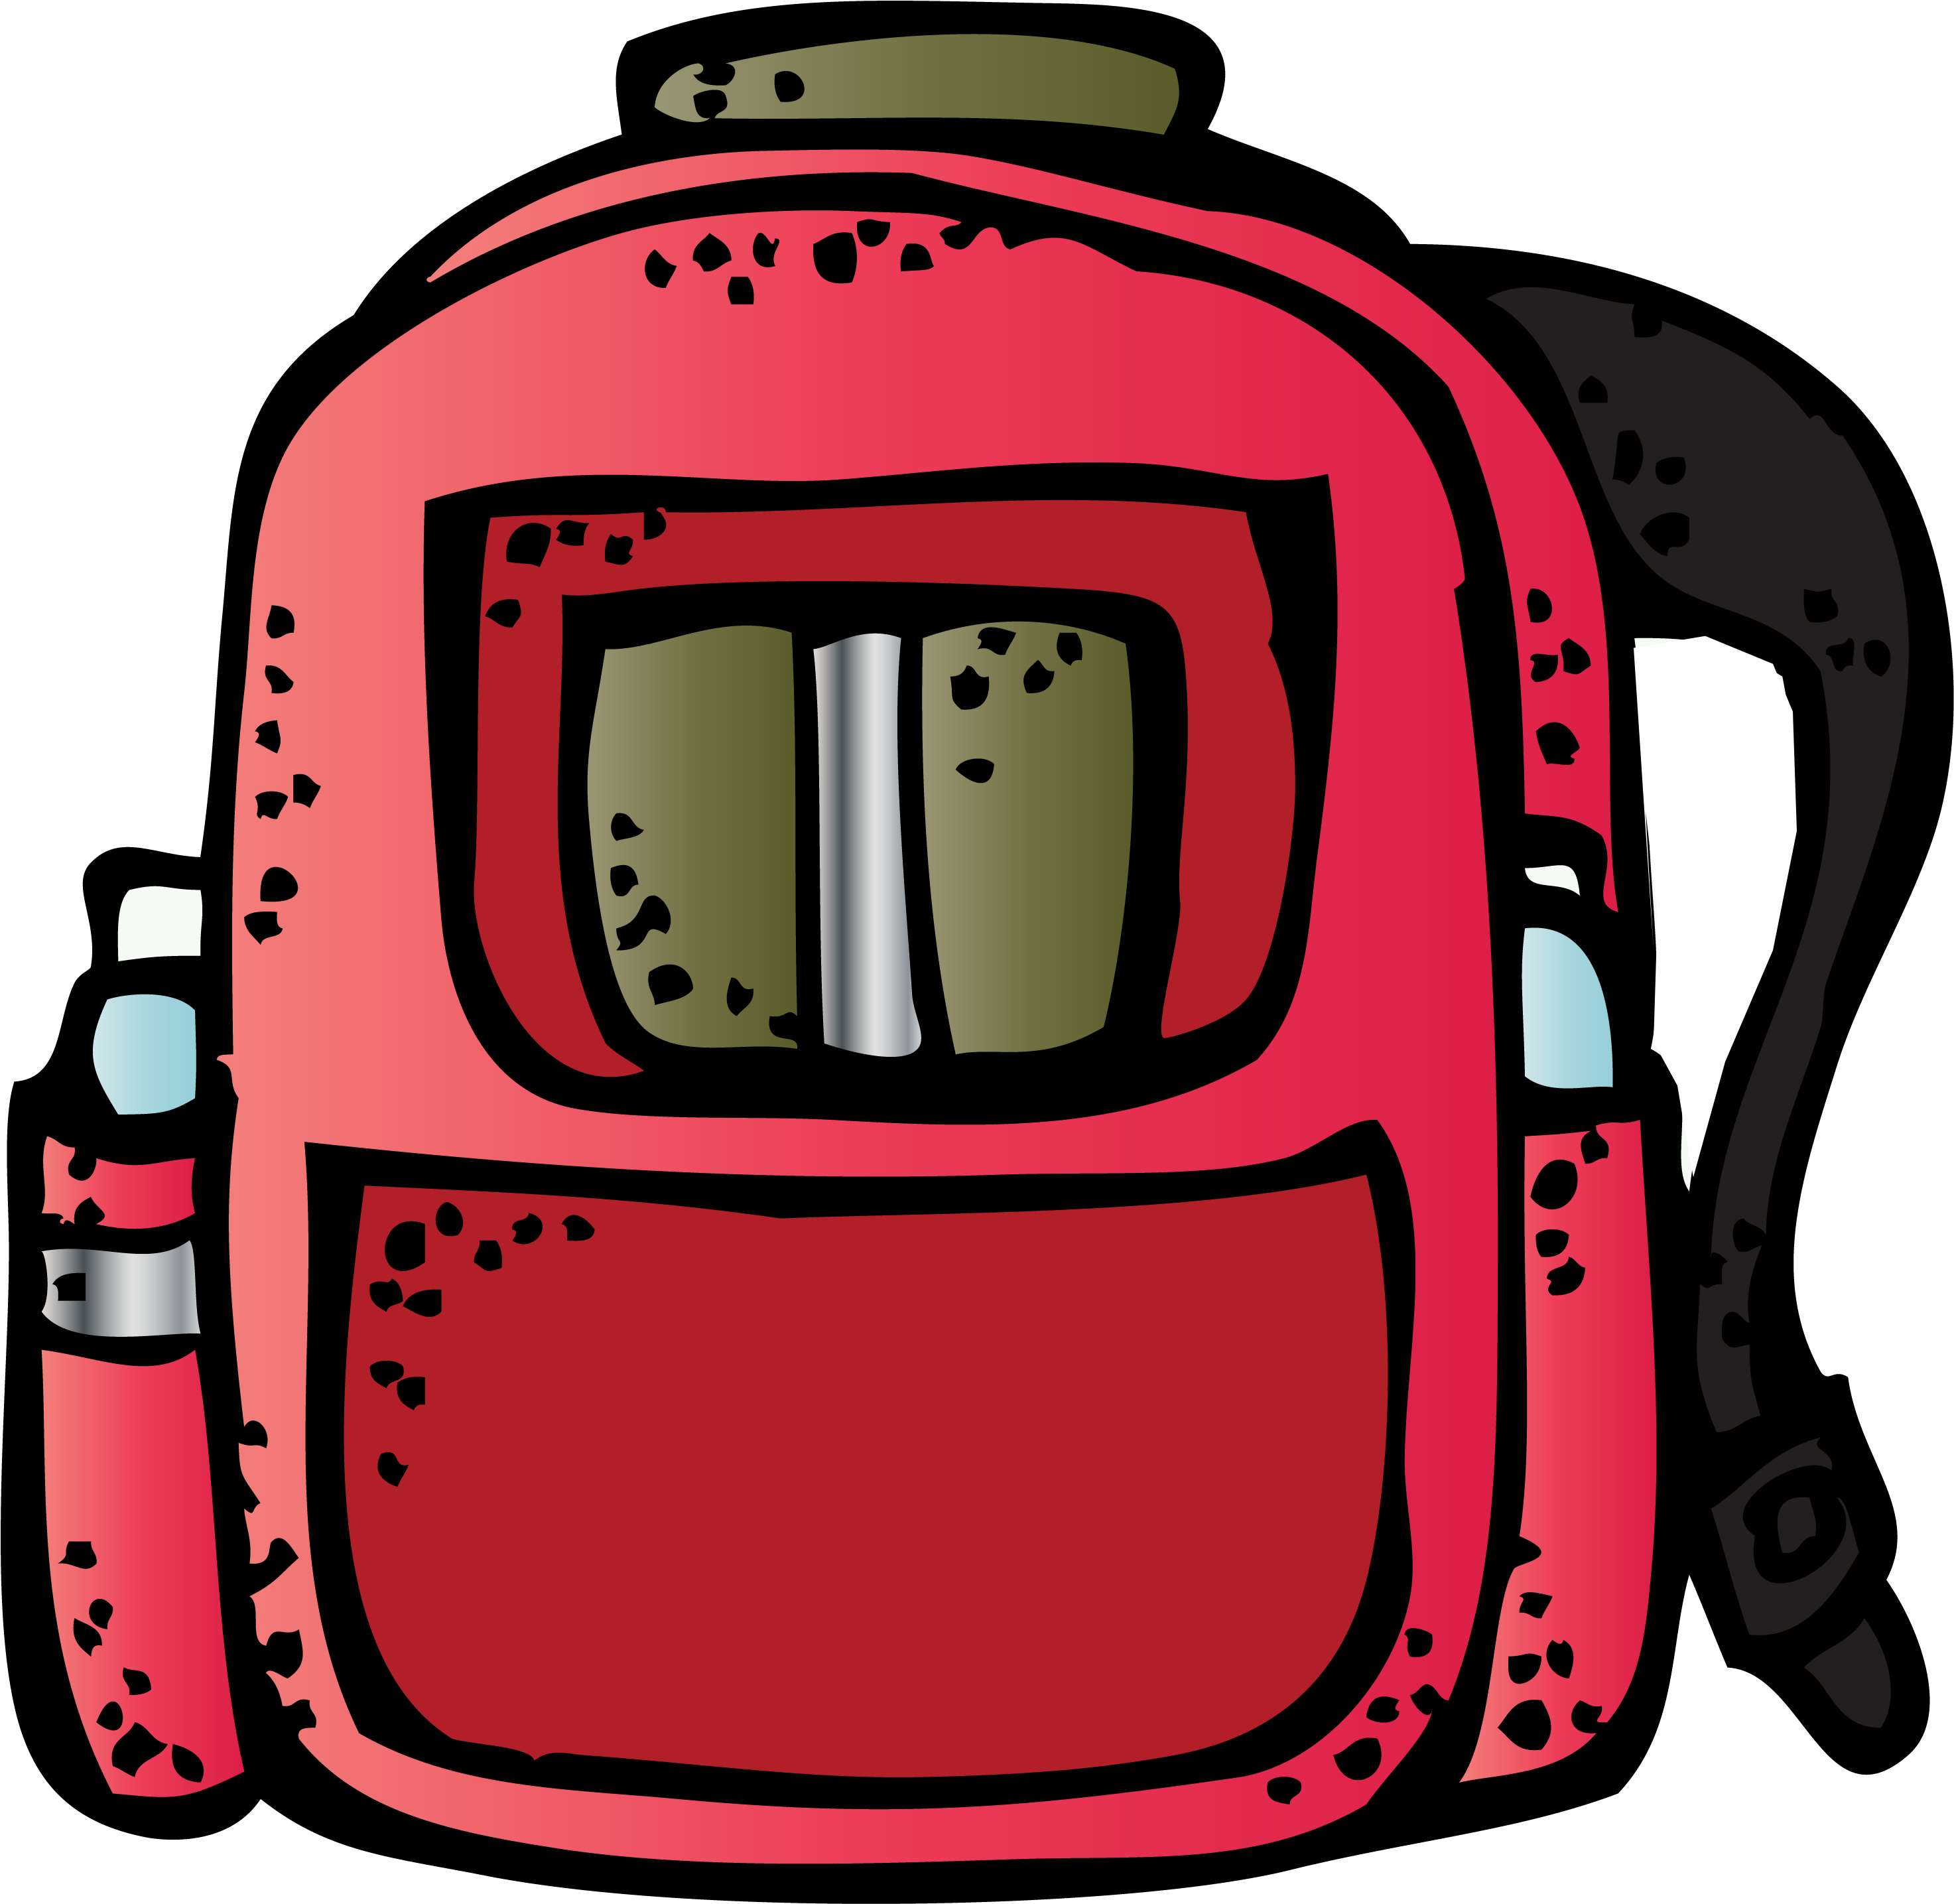 Red Backpack Cartoon Illustration